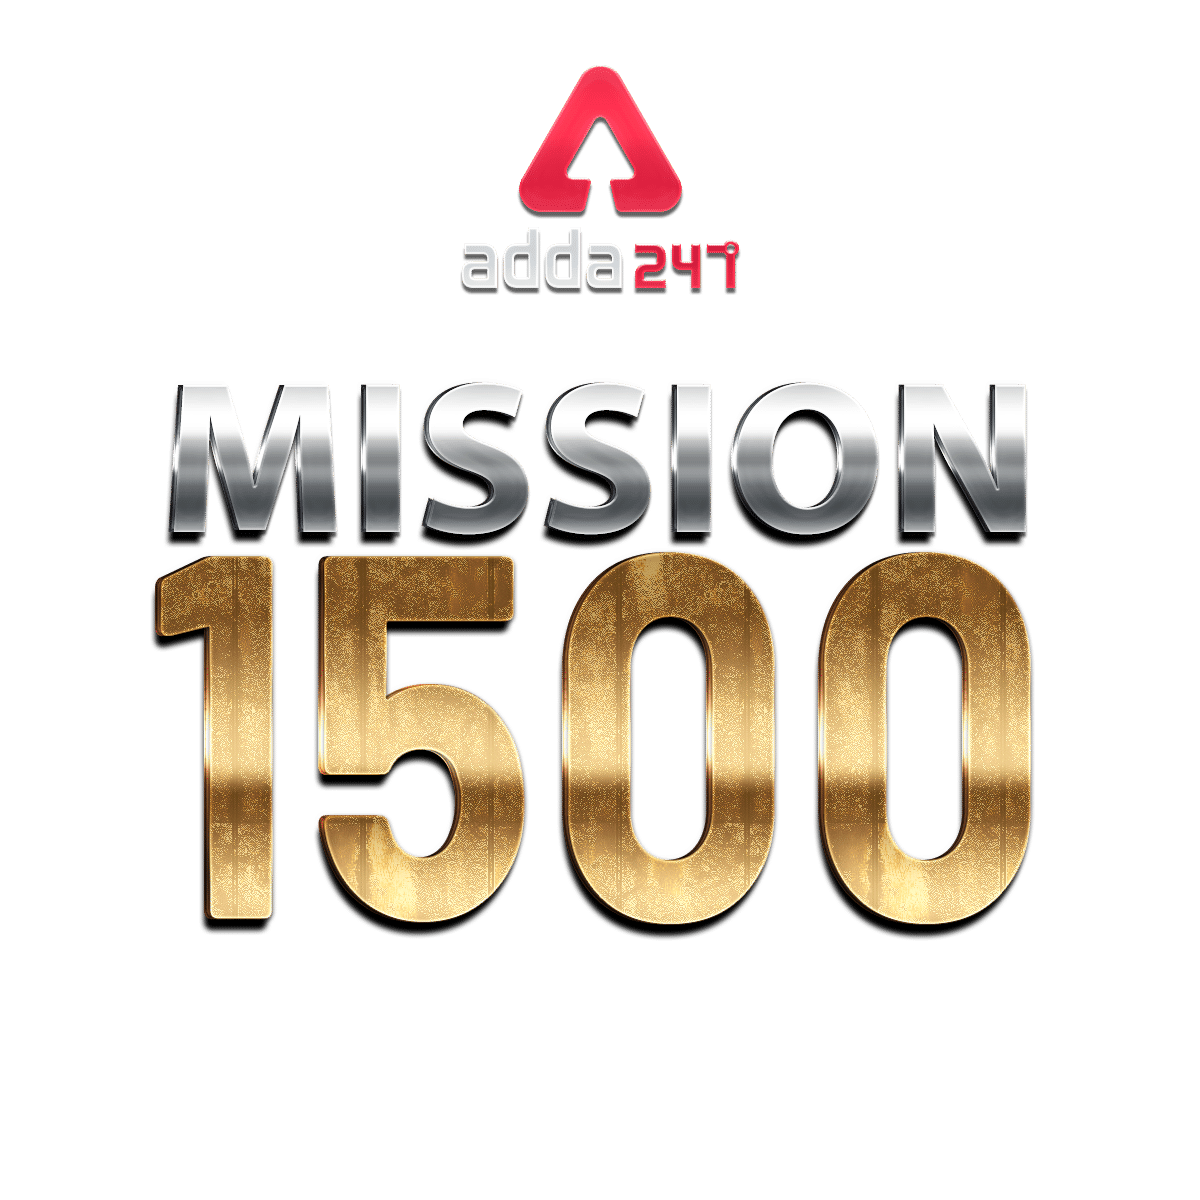 MISSION 1500 — LAUNCHING ON 27 NOVEMBER ? 7 AM | GOVT. JOB ASPIRANTS_30.1